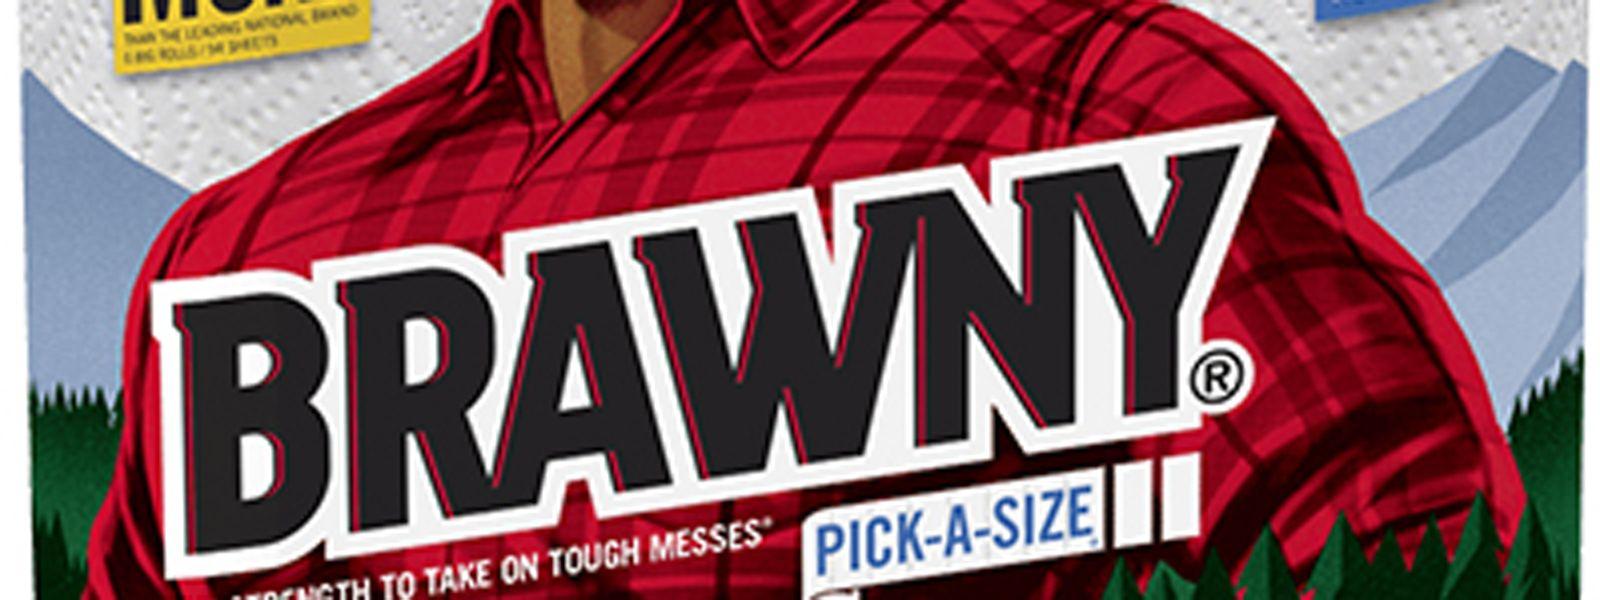 Brawny Logo - KOCH Newsroom | Brawny is Bigger and Better Than Ever